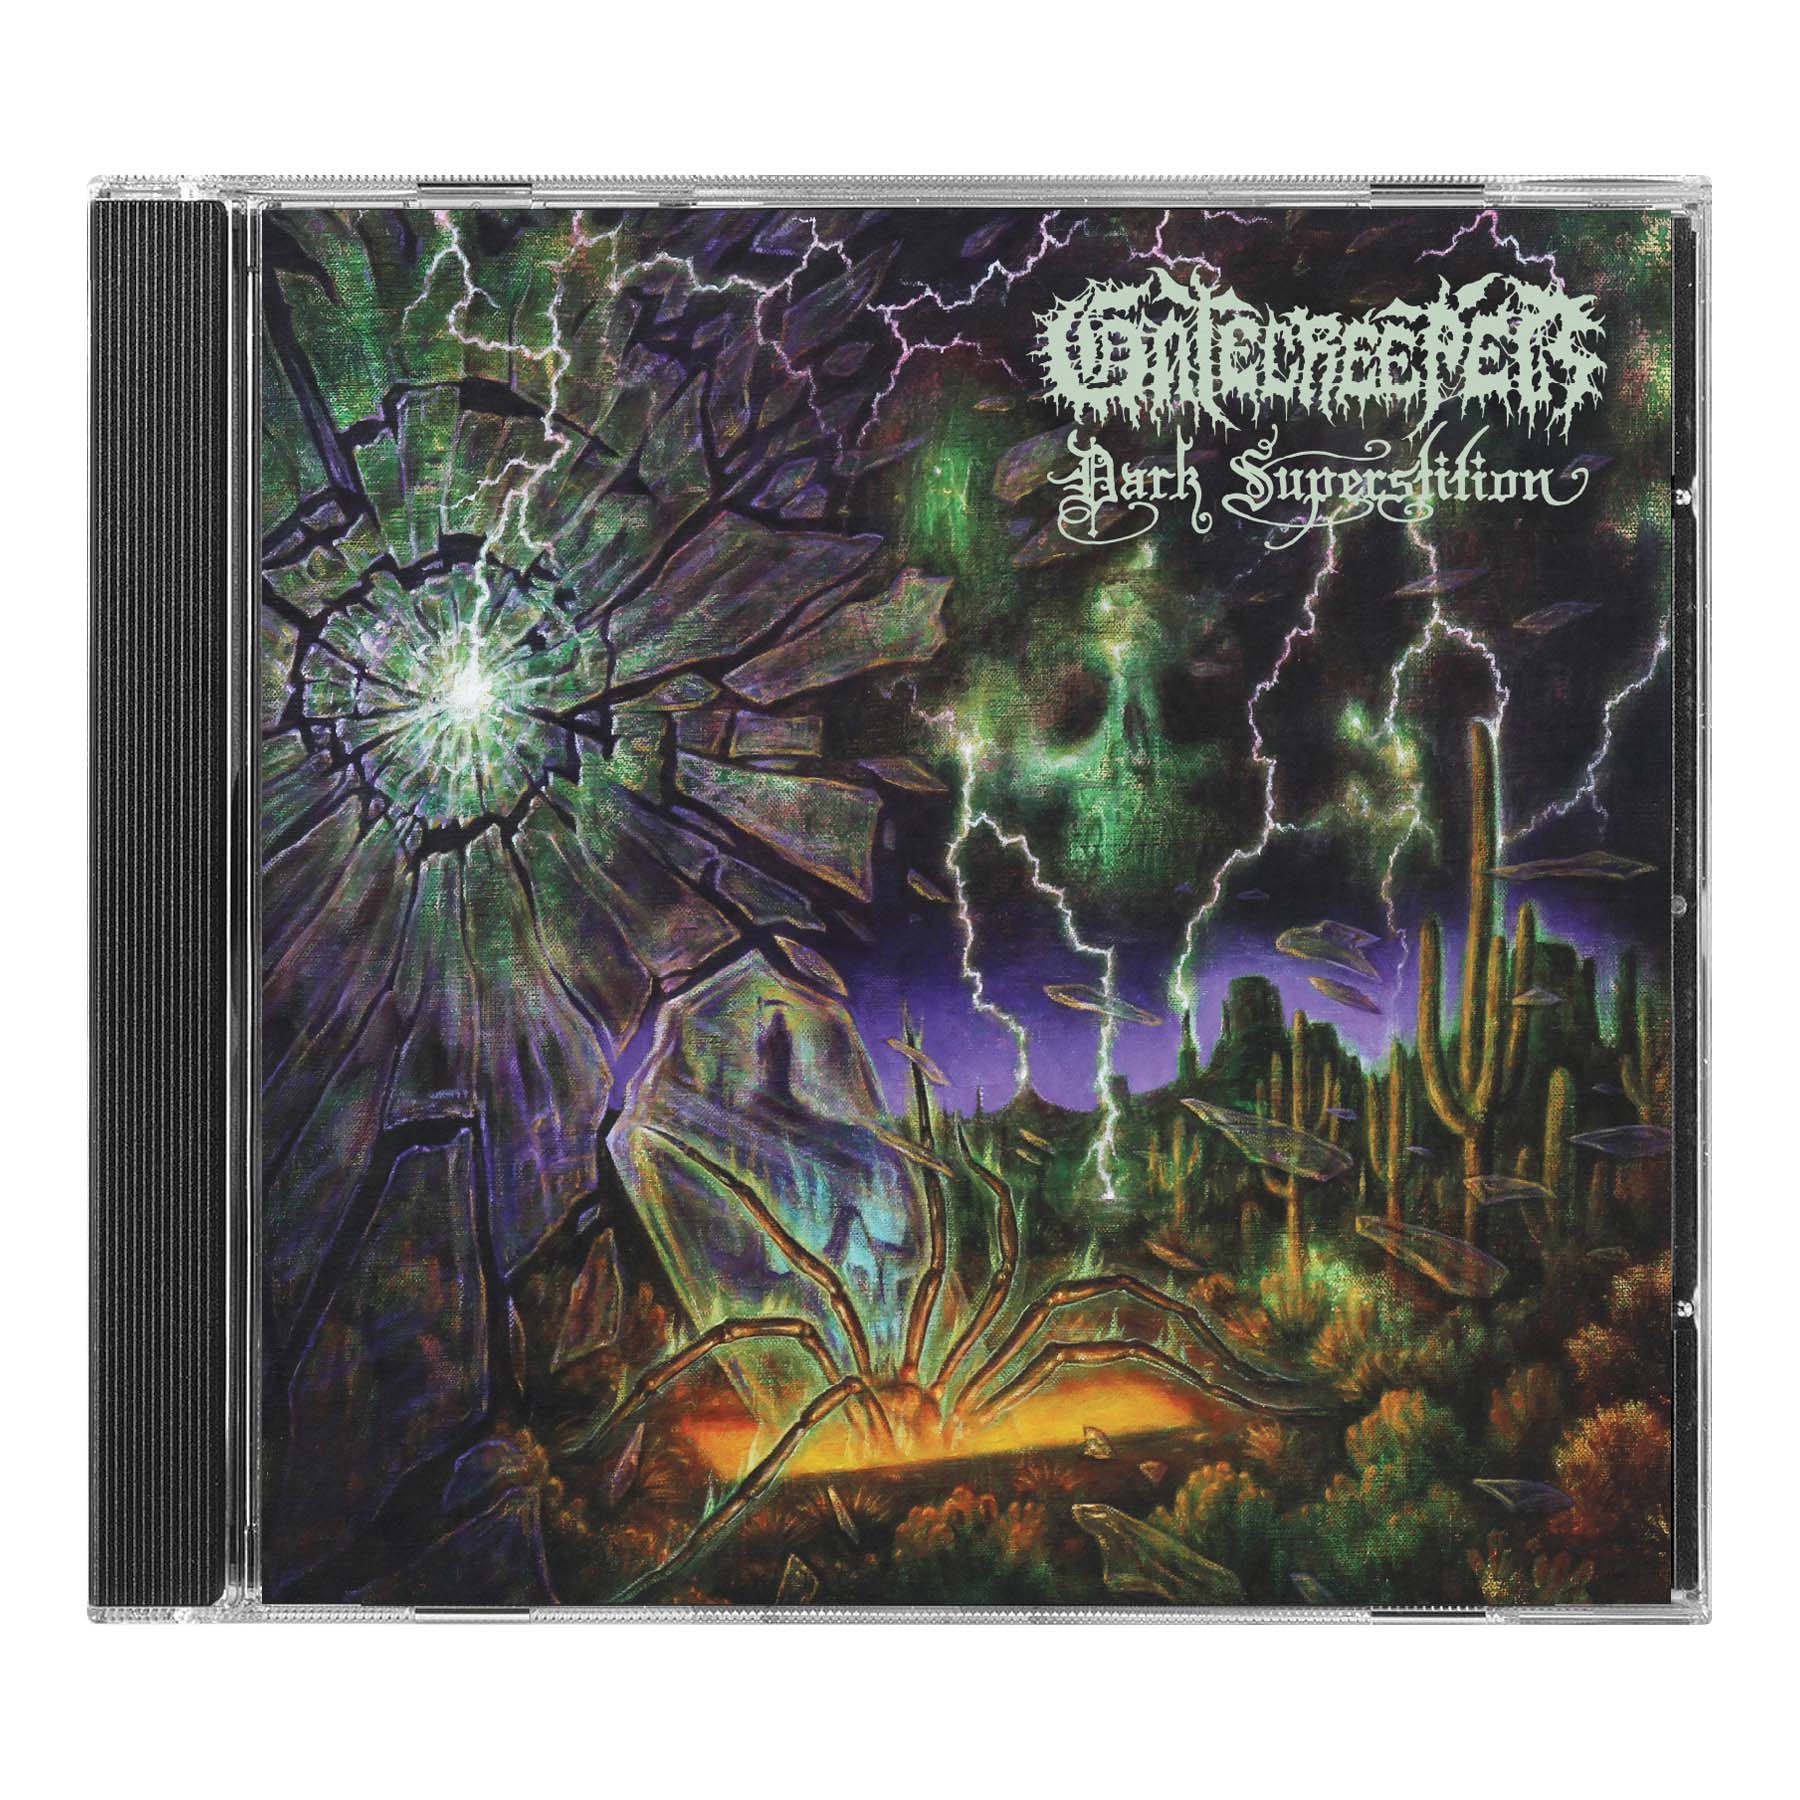 Gatecreeper "Dark Superstition" CD - PRE-ORDER